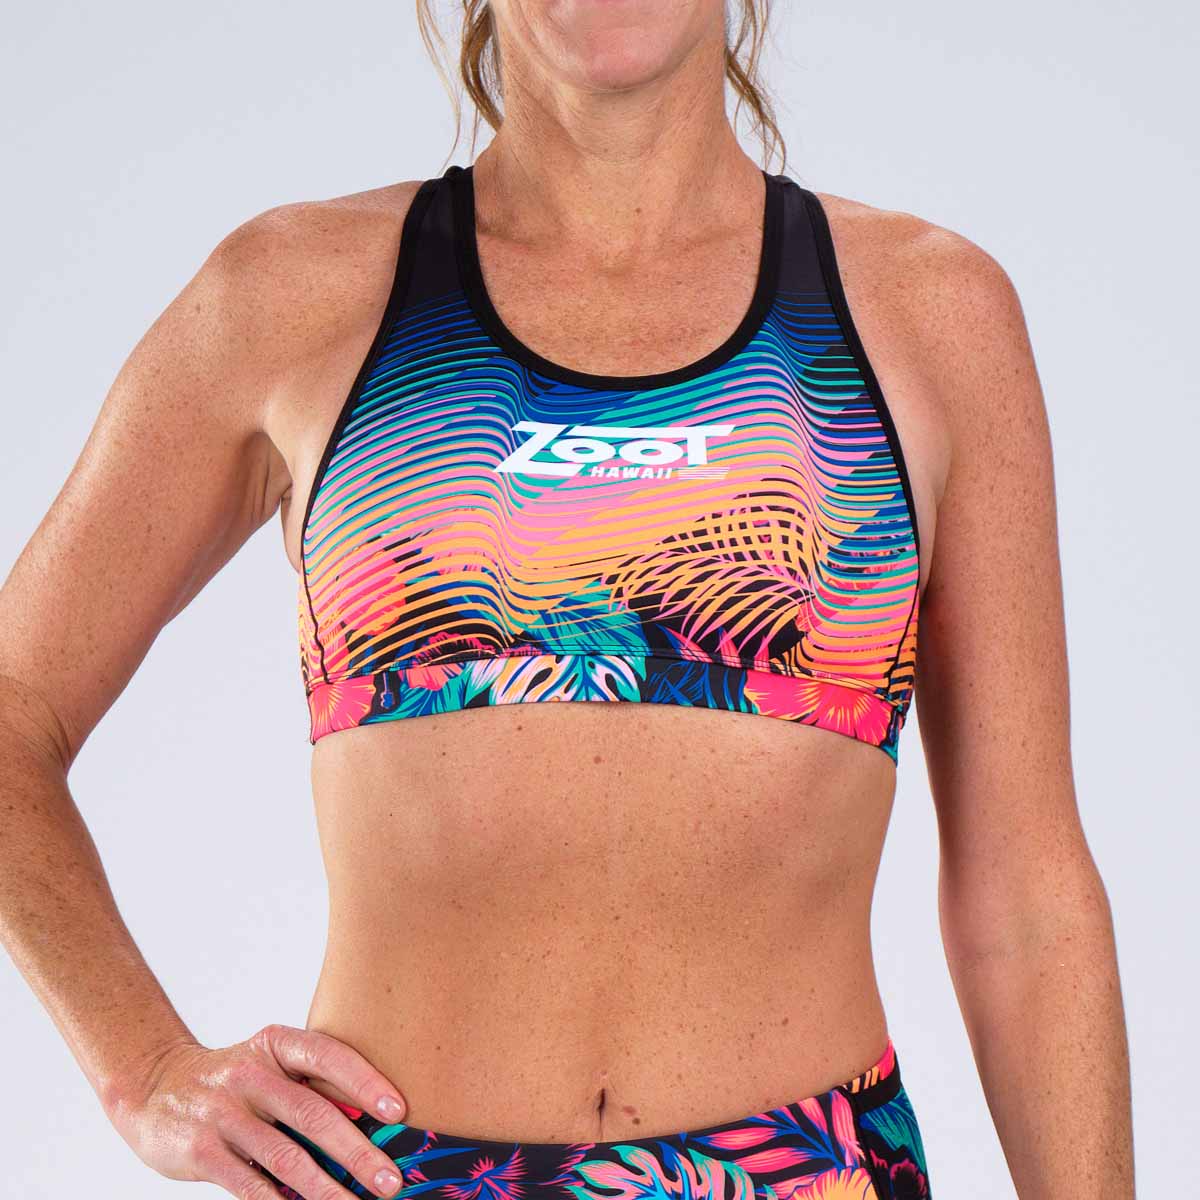 Zoot Hawaii Blue Sports Bra Size 30 New with tags USA Triathlon running gear